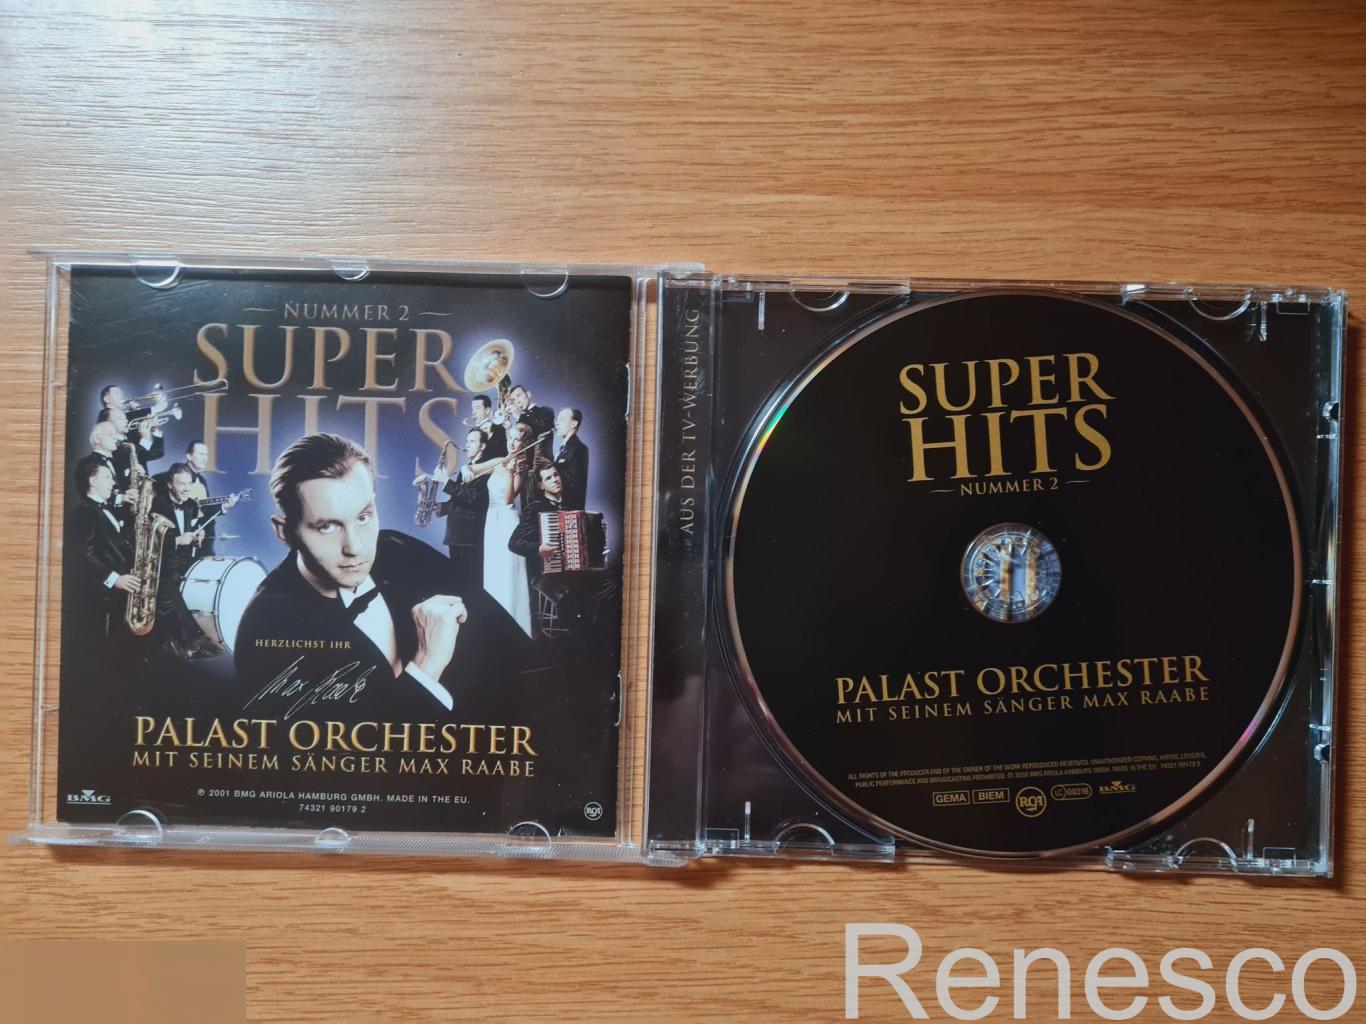 Palast Orchester Mit Seinem Sanger Max Raabe ?– Super Hits Nummer 2 (Europe) (20 2